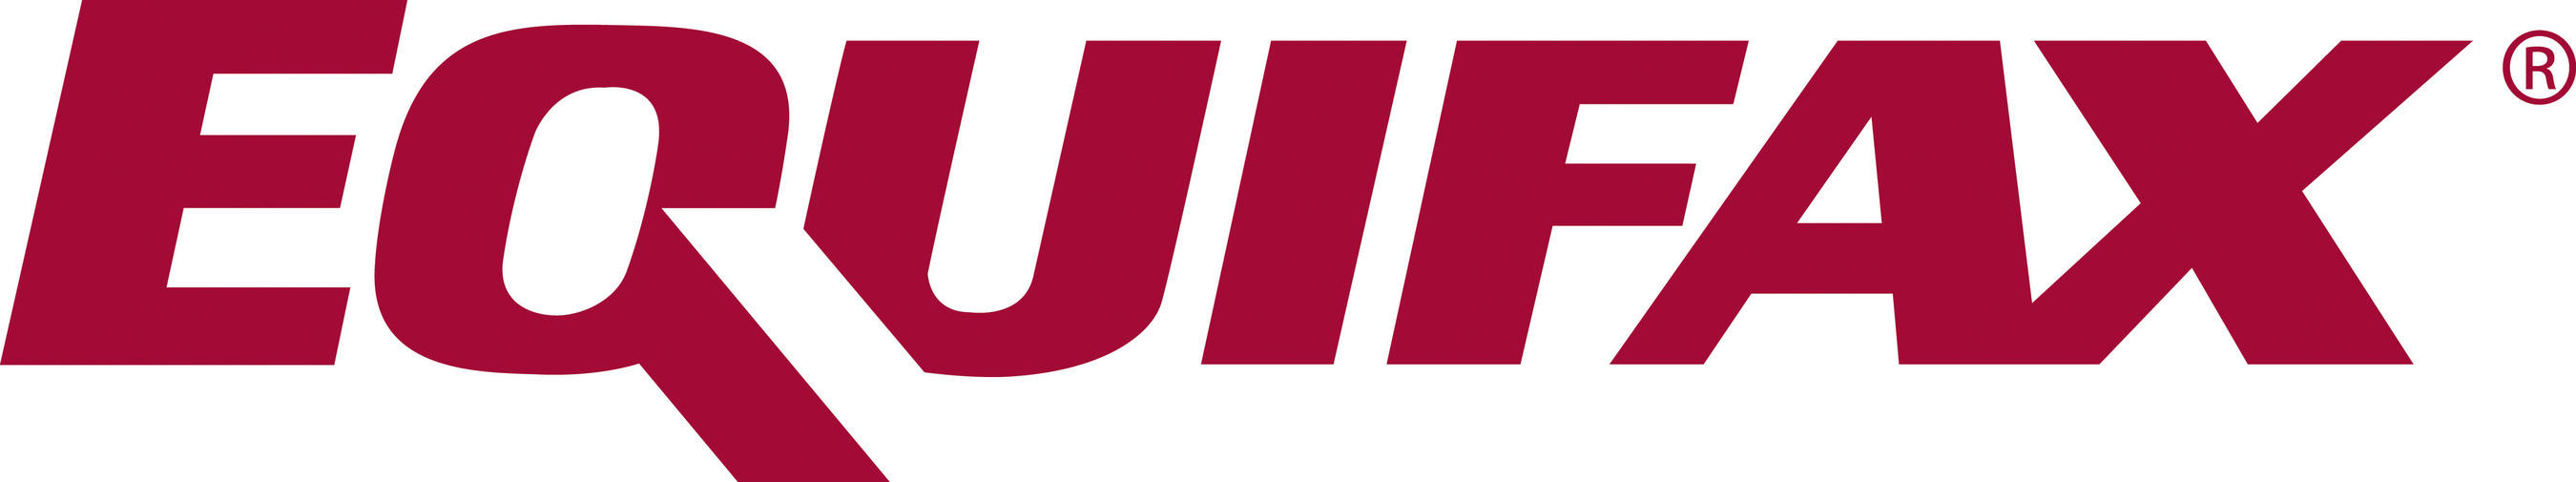 Equifax Brand Logo